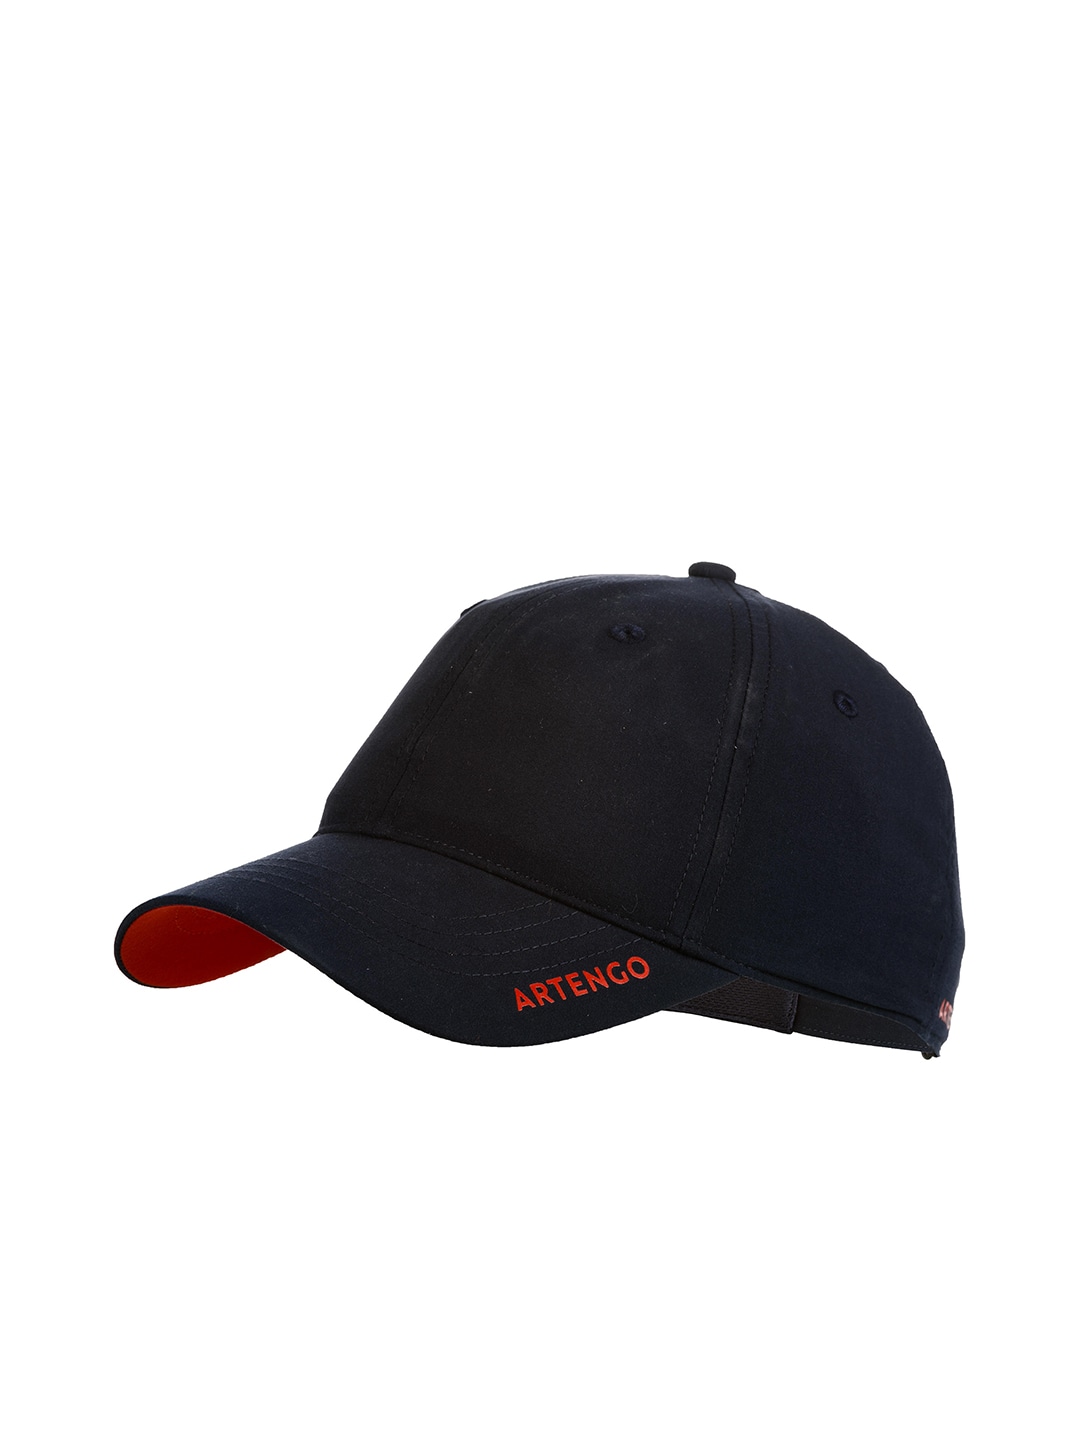 Accessories Caps | Artengo By Decathlon Unisex Navy Blue & Red Solid Baseball Cap - LU22480